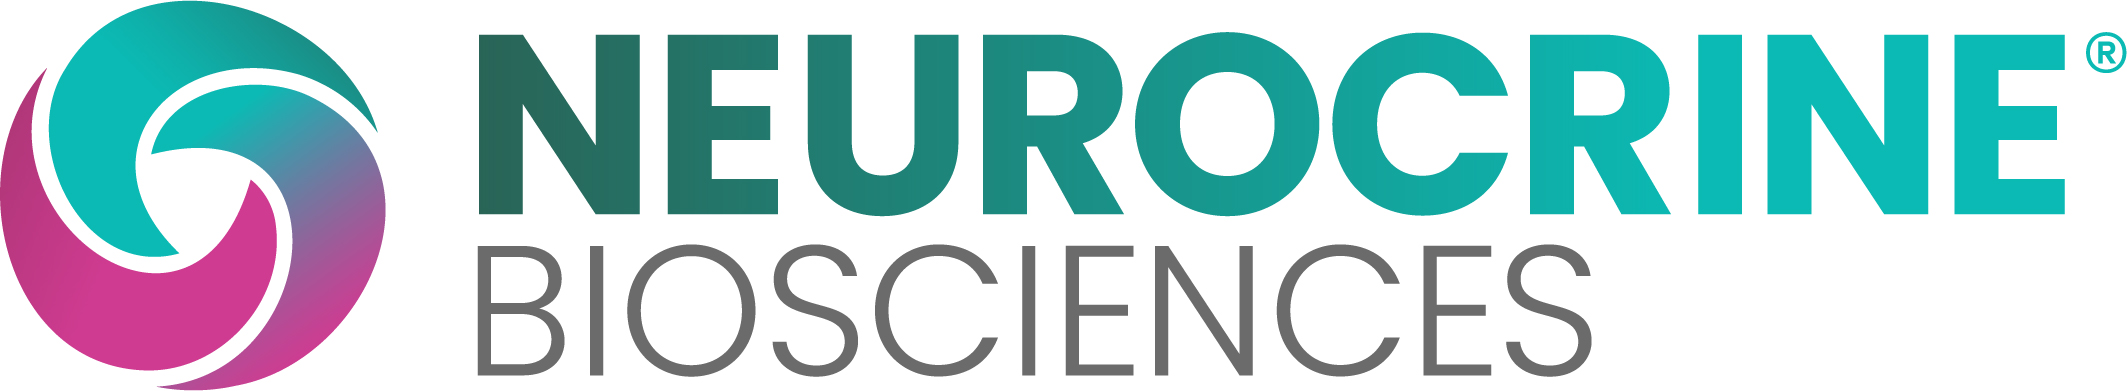 neurocrine logo 2021 notag rgb